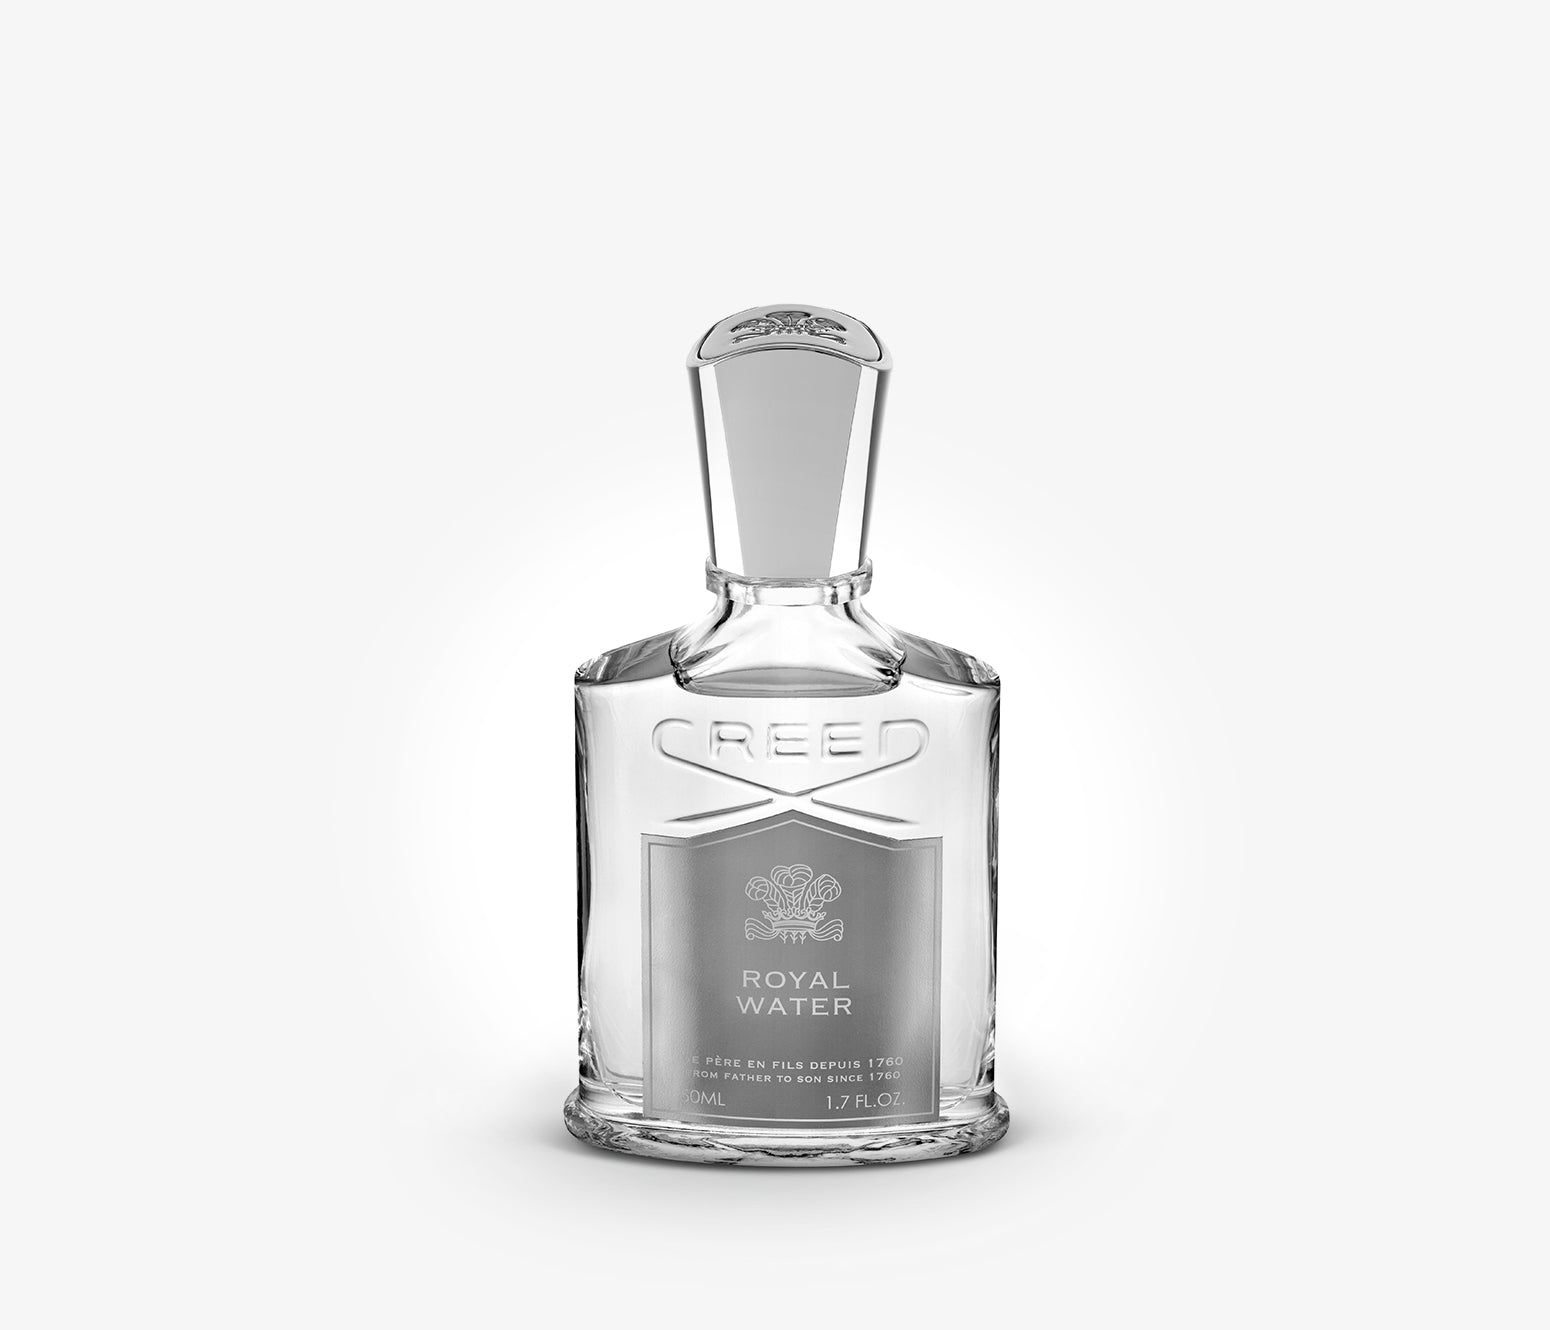 Creed - Royal Water - 50ml - 10001117 - Product Image - Fragrance - Les Senteurs